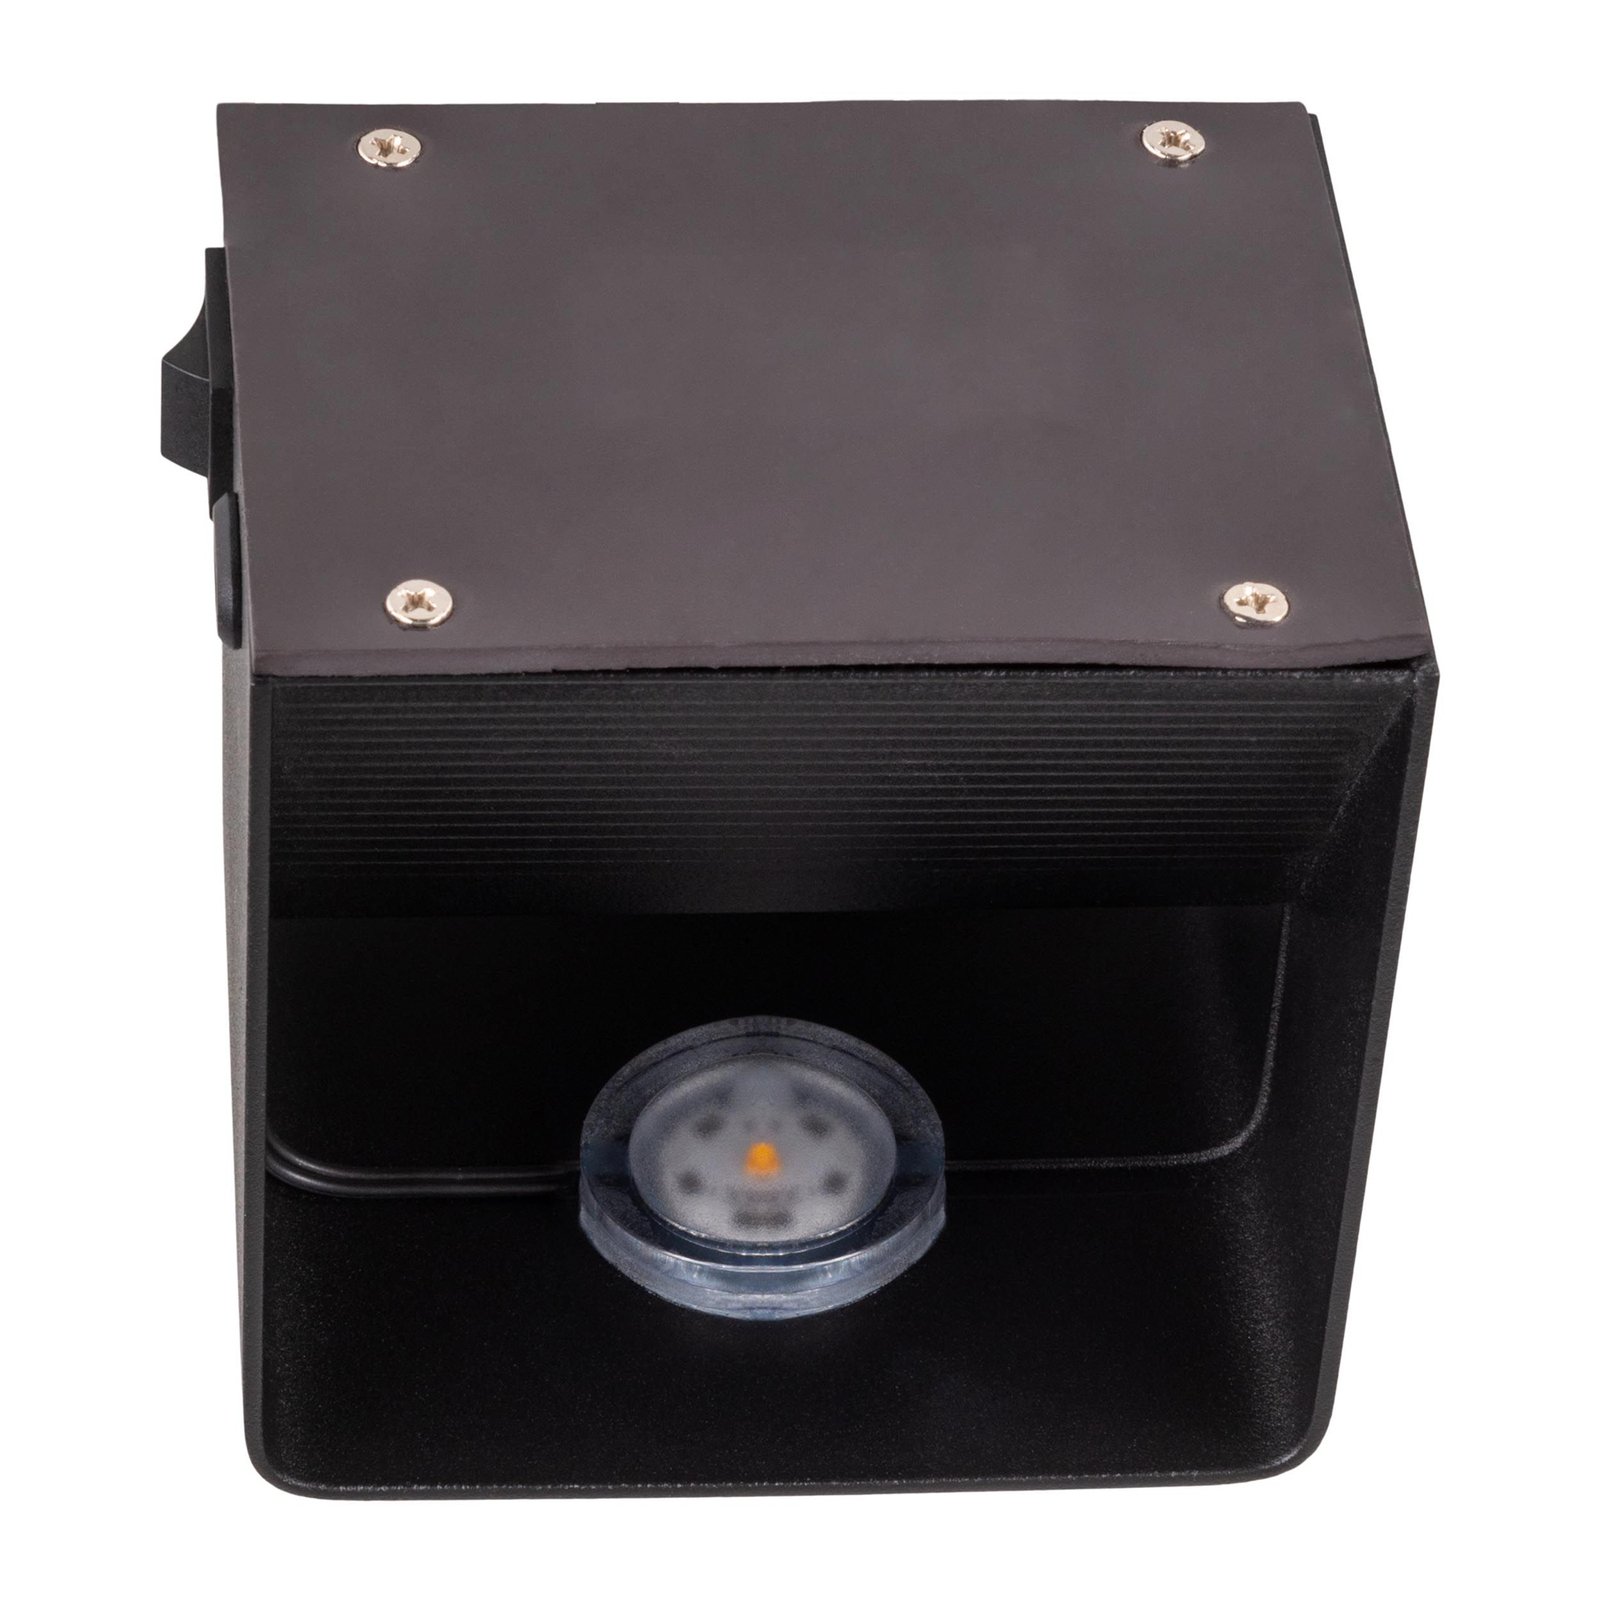 LED-vägglampa Cube batteri, magnetisk, svart